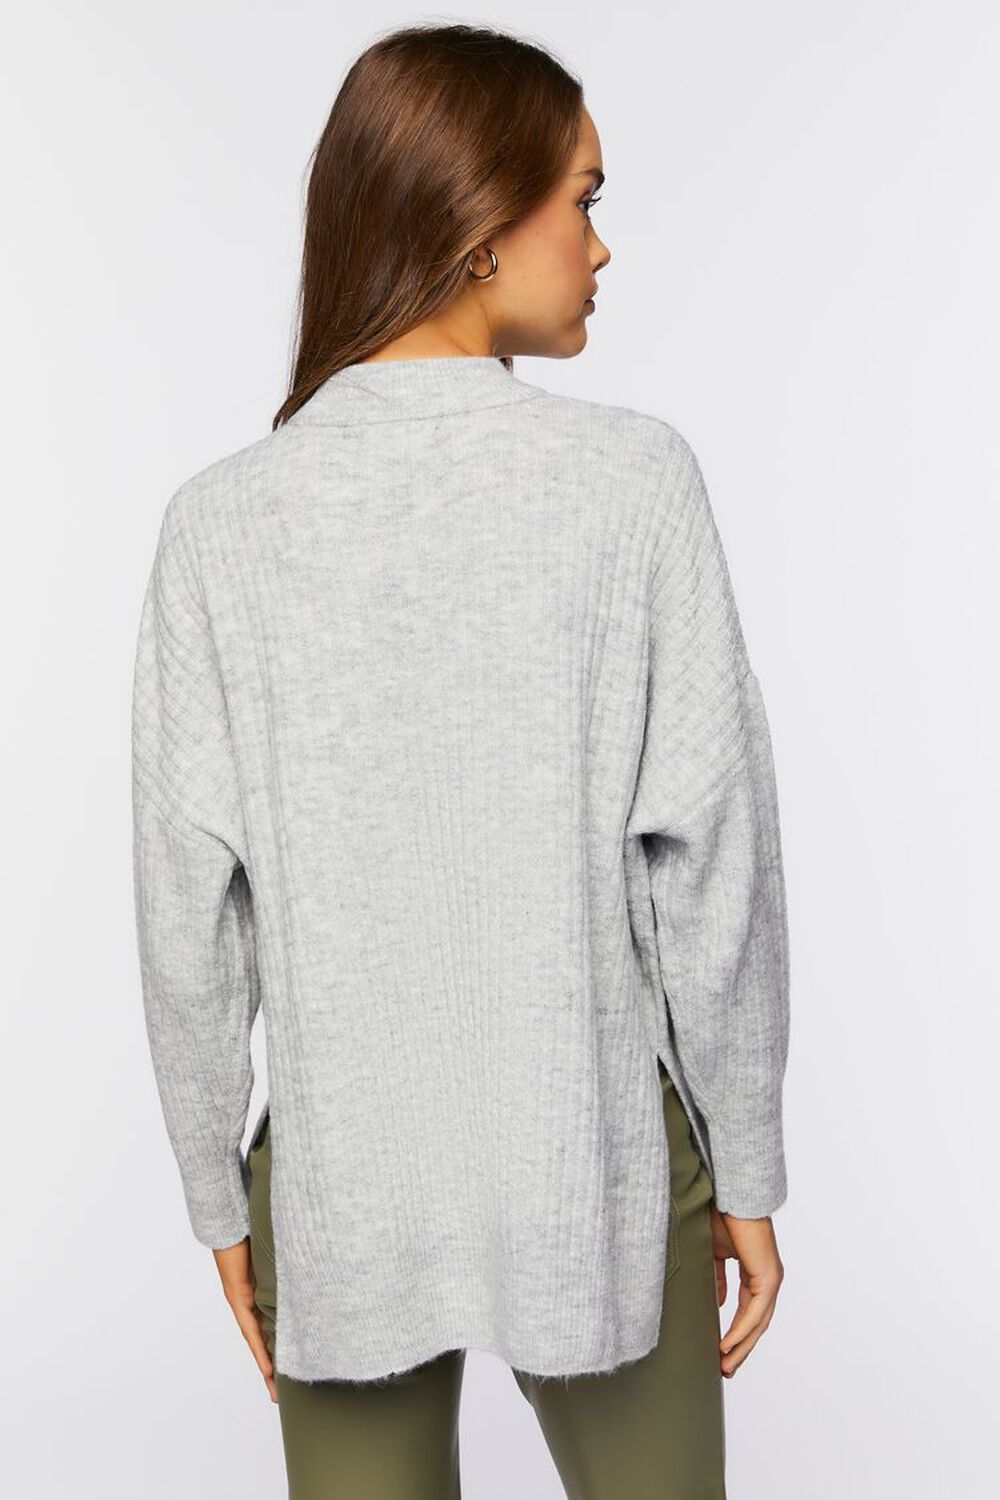 HEATHER GREY Mock Neck Drop-Sleeve Sweater, image 3